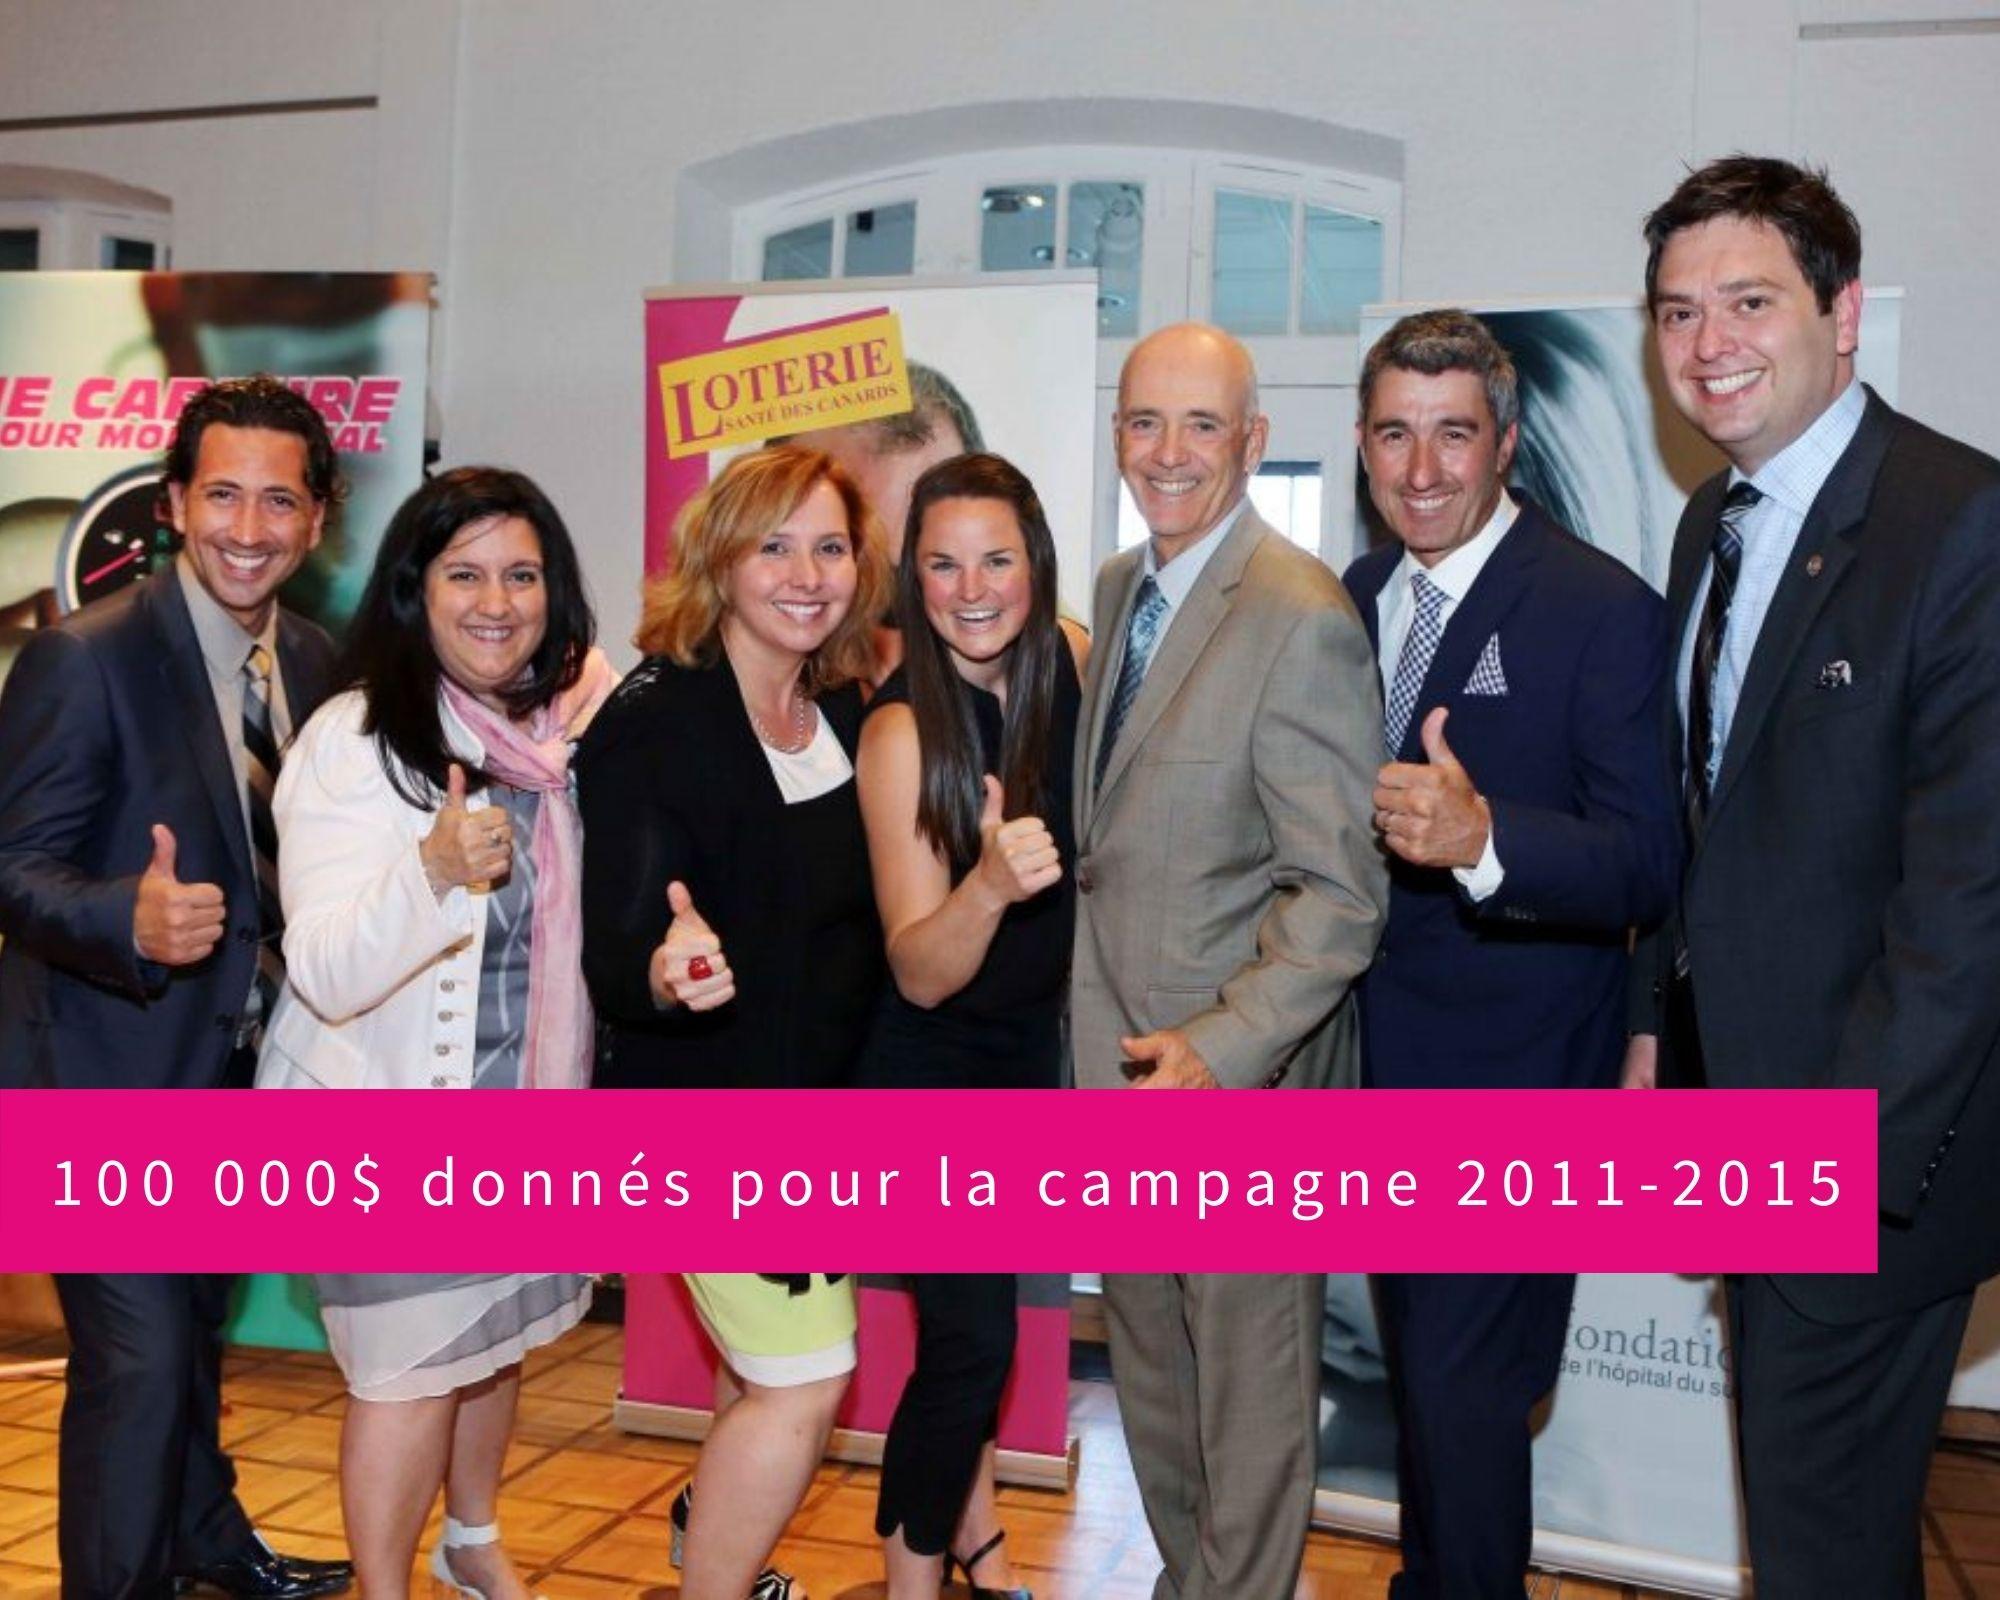 CEZinc-100-000-campagne-2011-2015-Fondation-H%C3%B4pital-Suro%C3%AEt.jpg#asset:1711